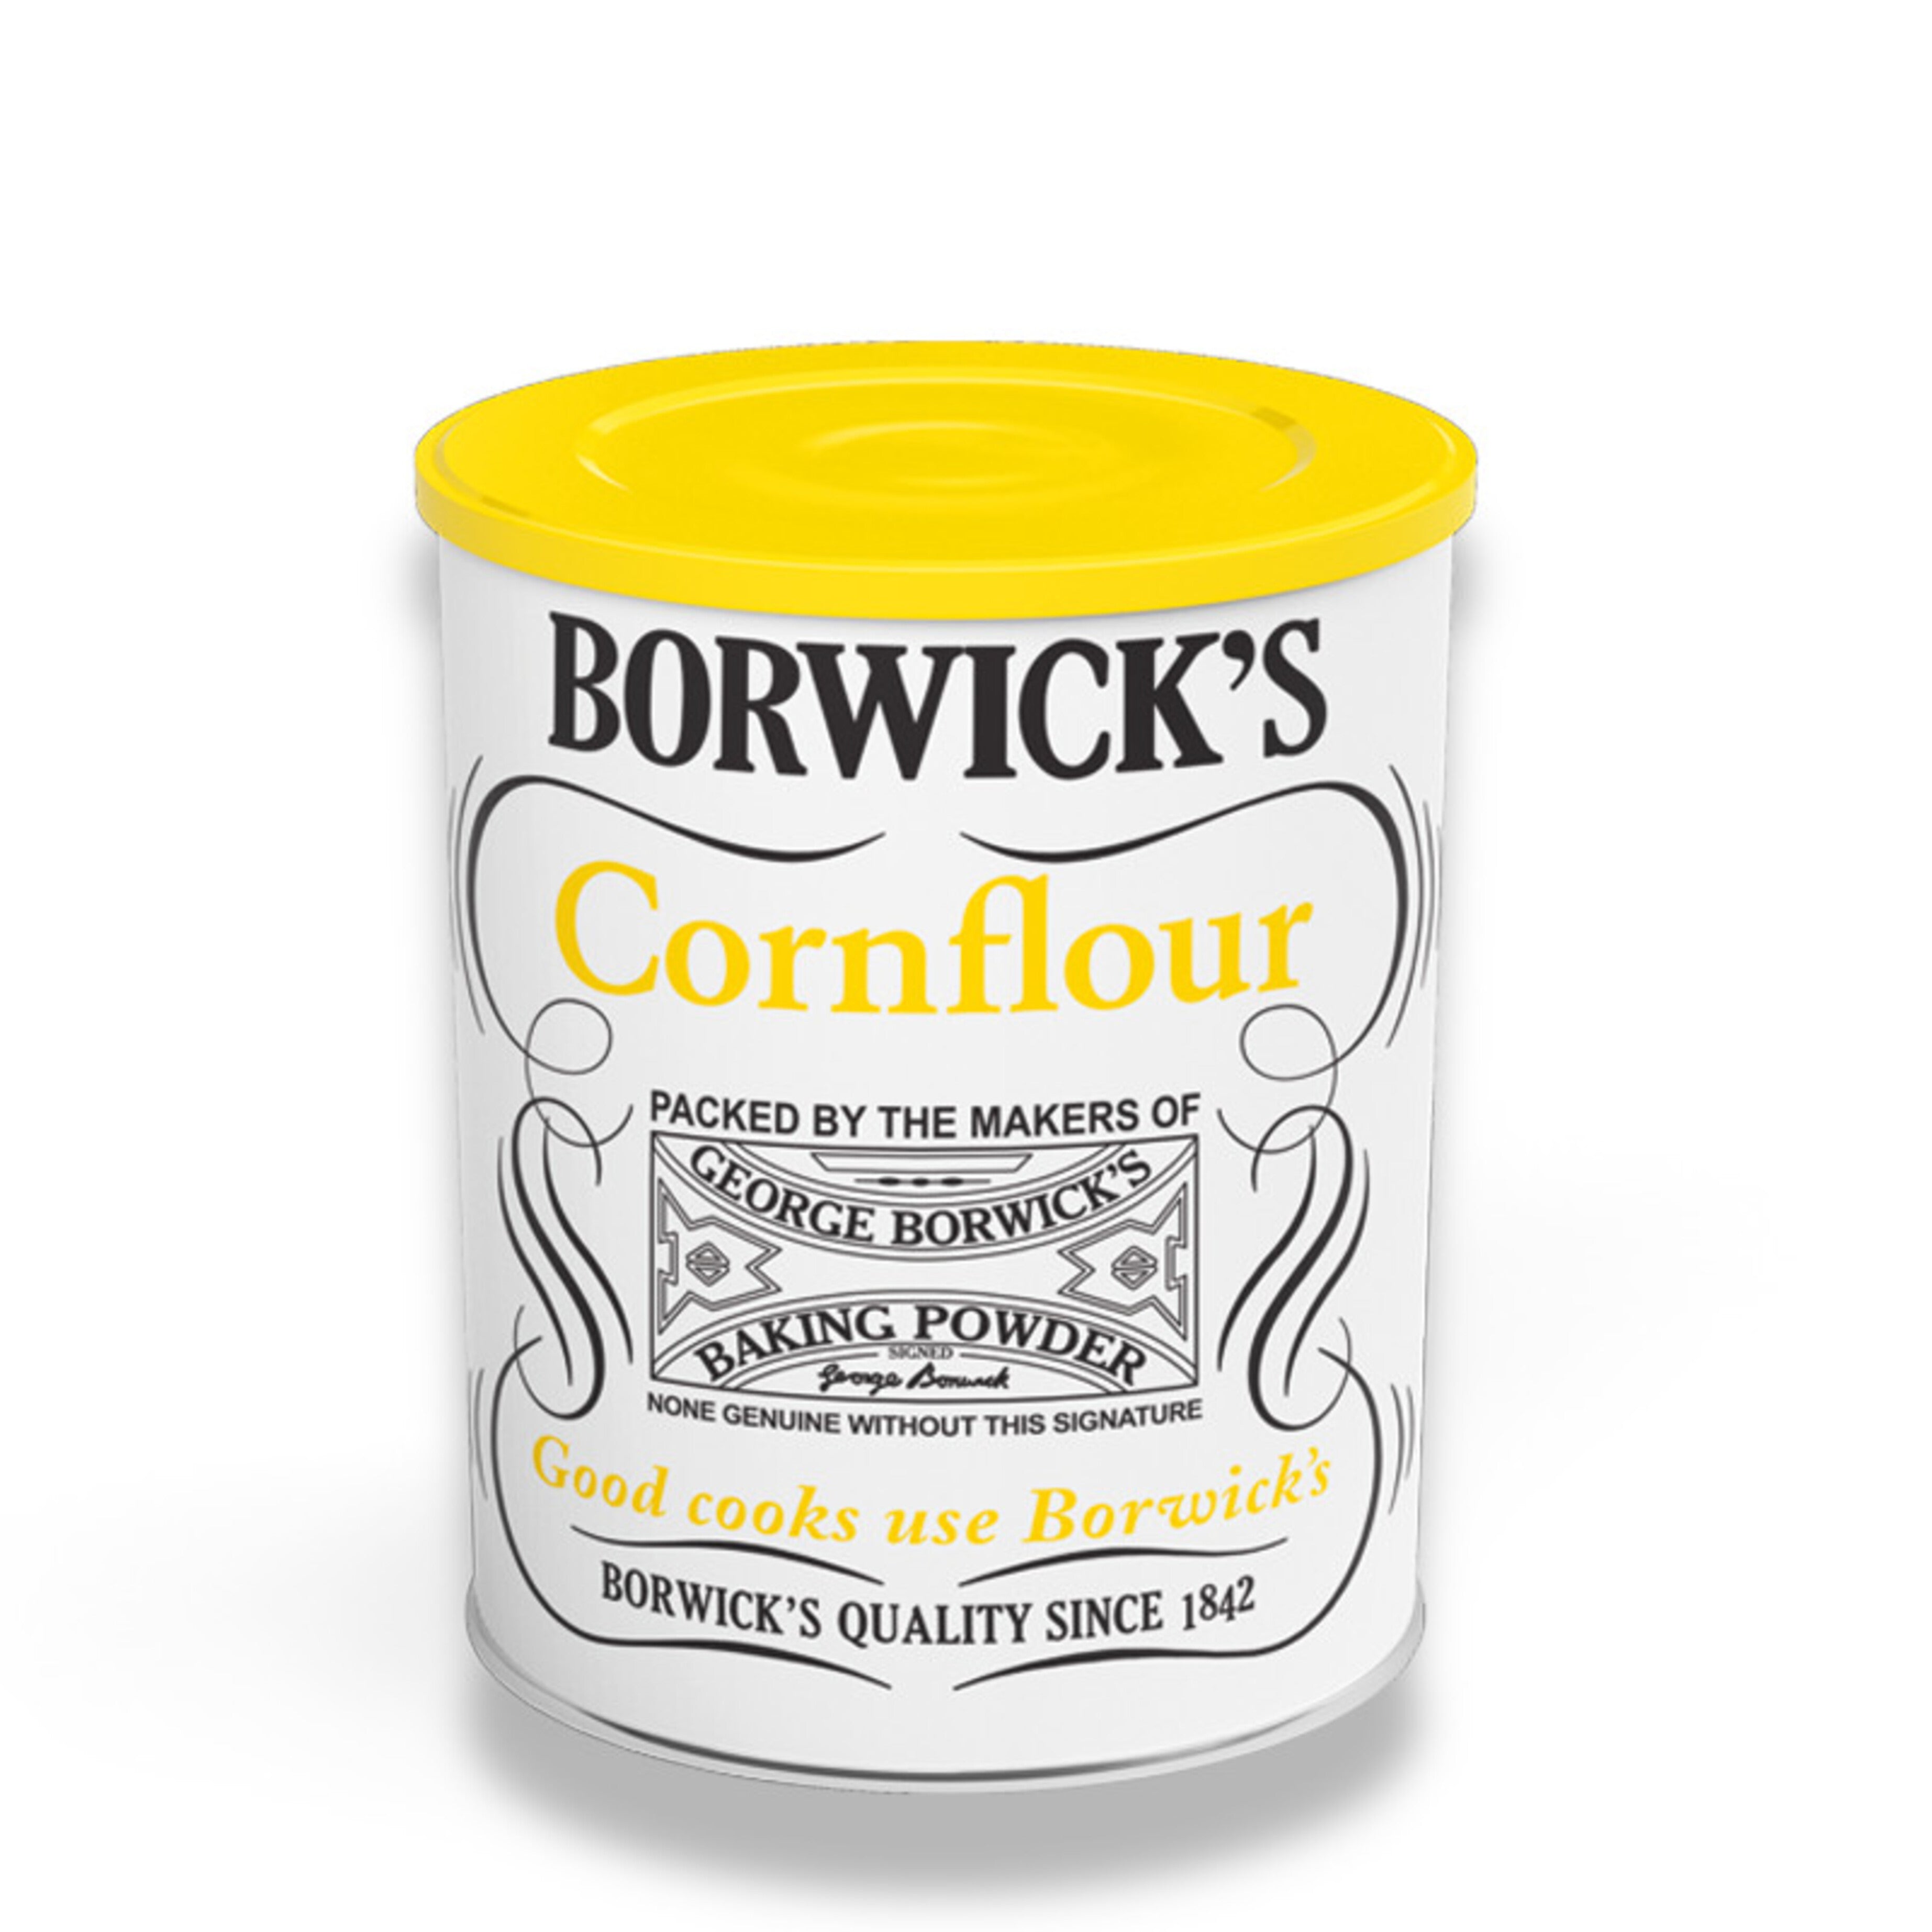 Borwick's Cornflour 150g - Pack of 6